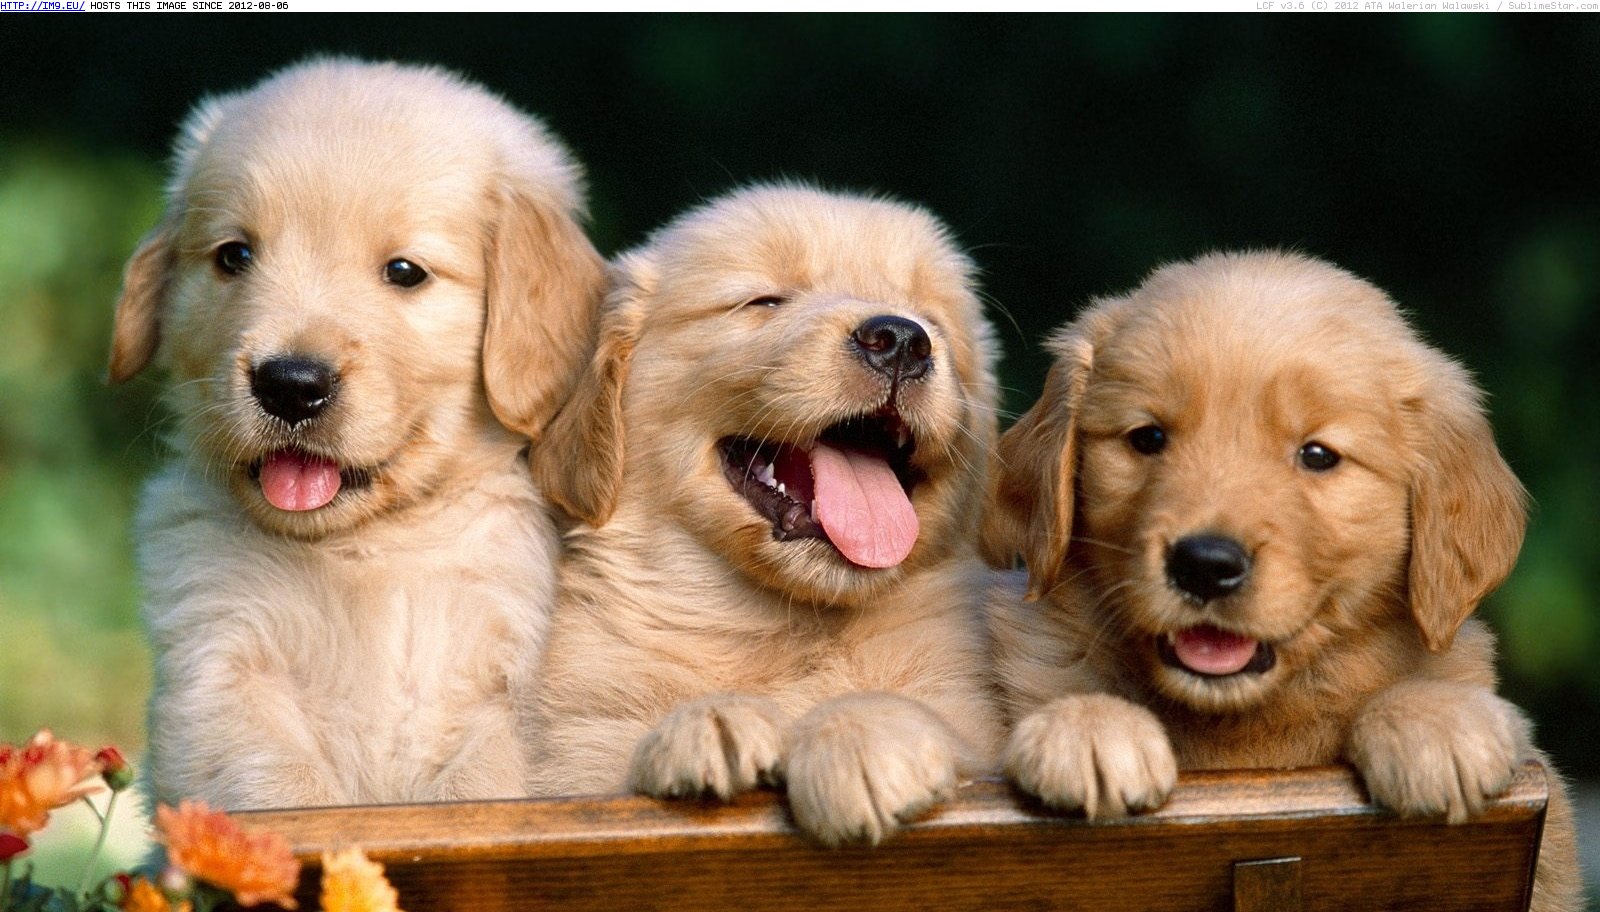 Puppies Golden Retriever Wallpaper Photos